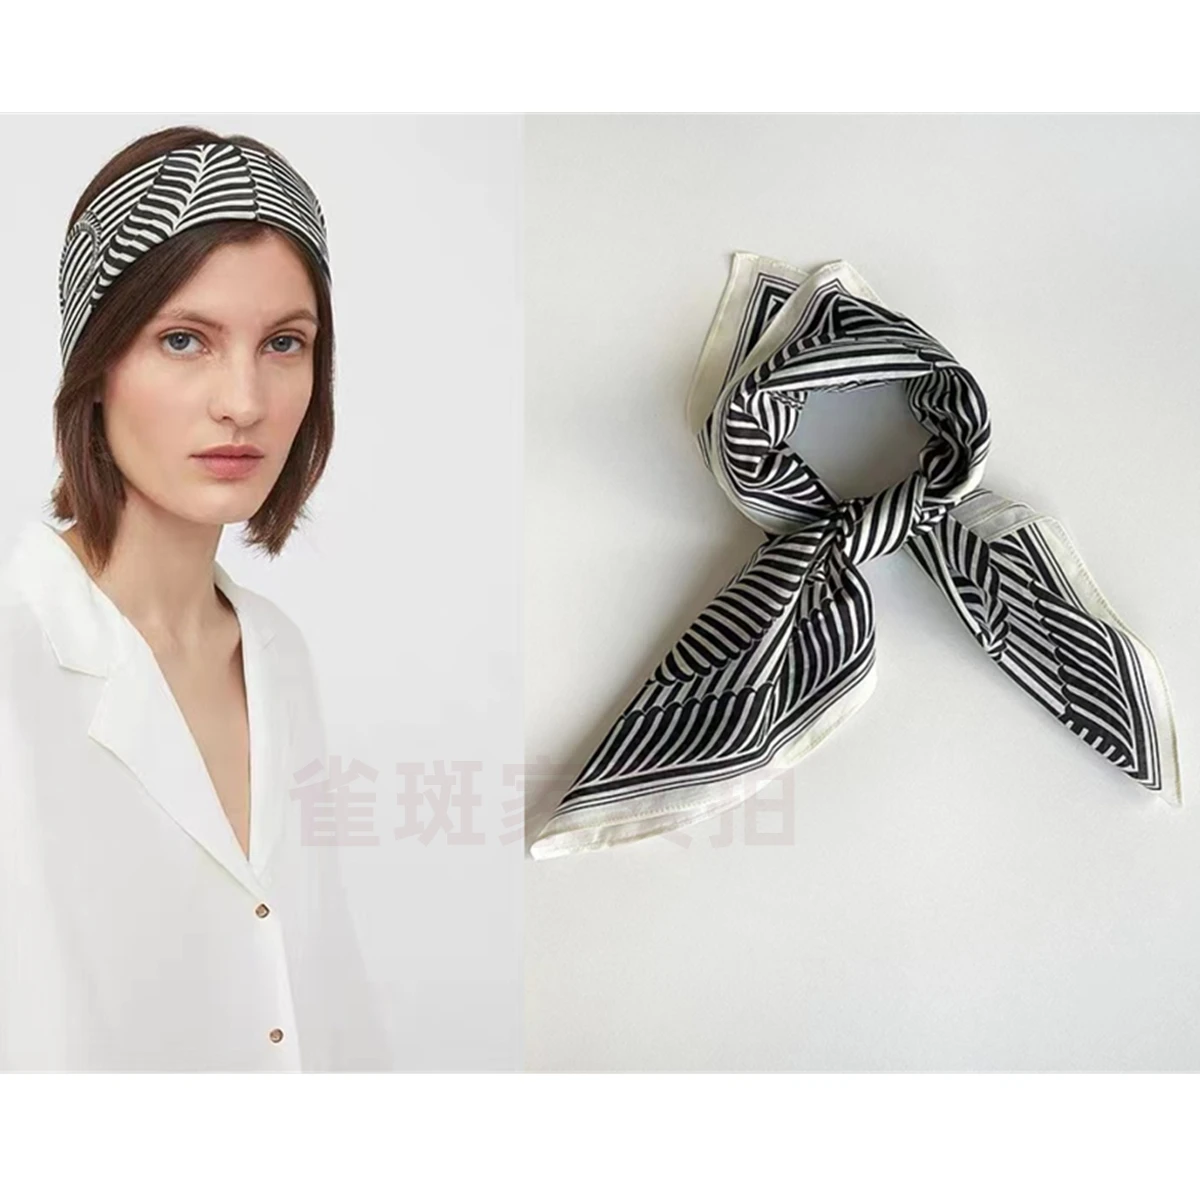 

TT Paisley pattern headband square scarf women's black cotton mulberry blend silk scarf beach resort style